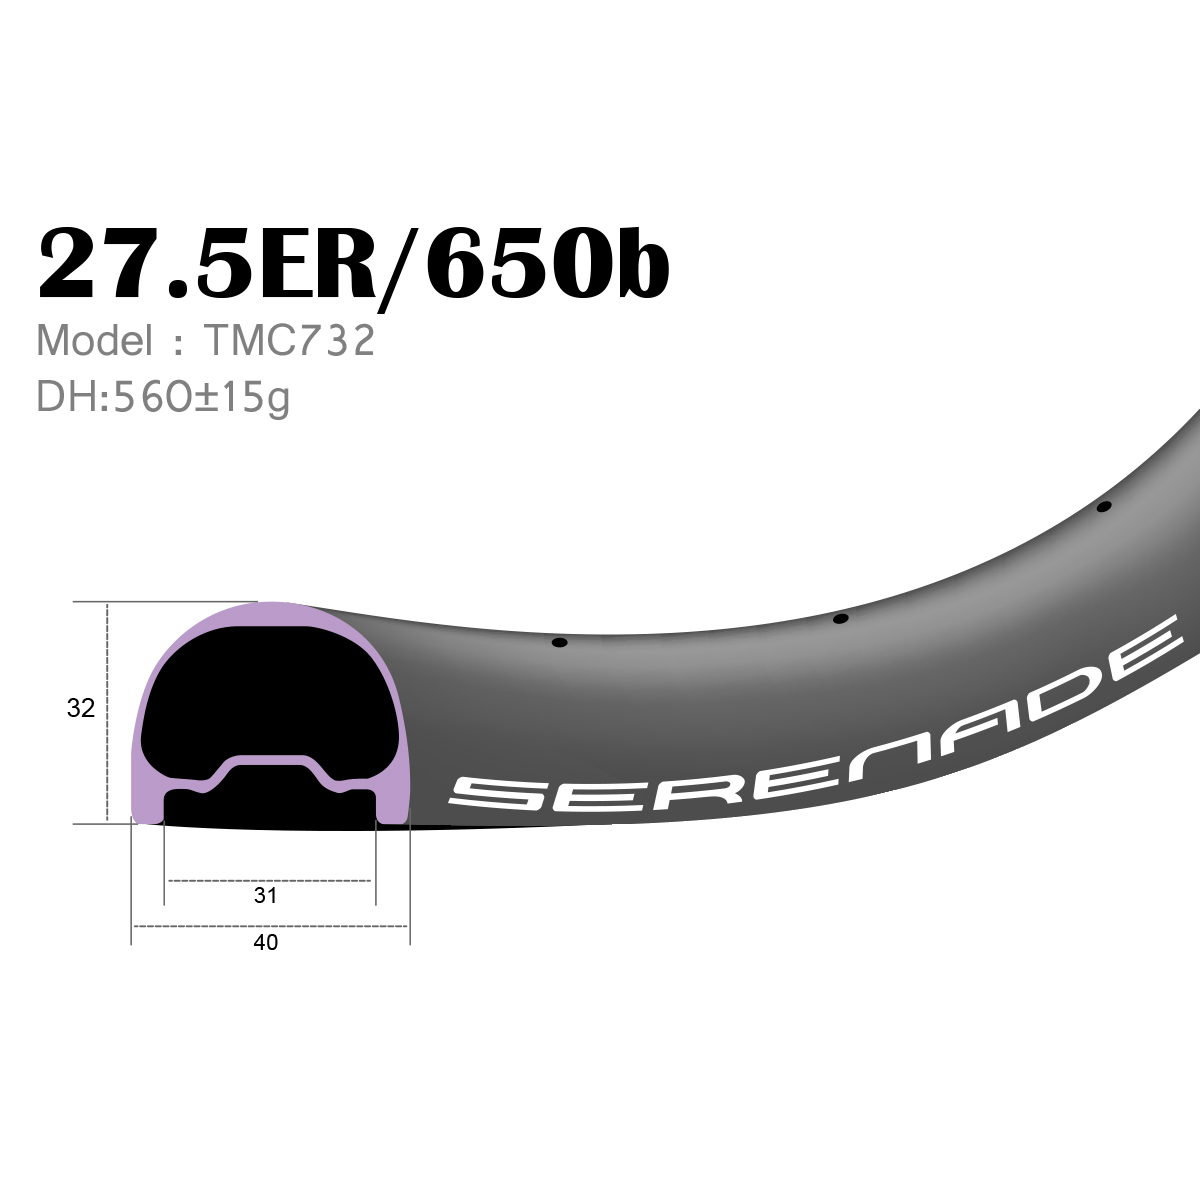 650b Endro Downhill carbon fiber wheelset rims 40mm wide TMC732 Only for DH ( Downhill ) bike carbon 650b mountain bike rims 40mm wide